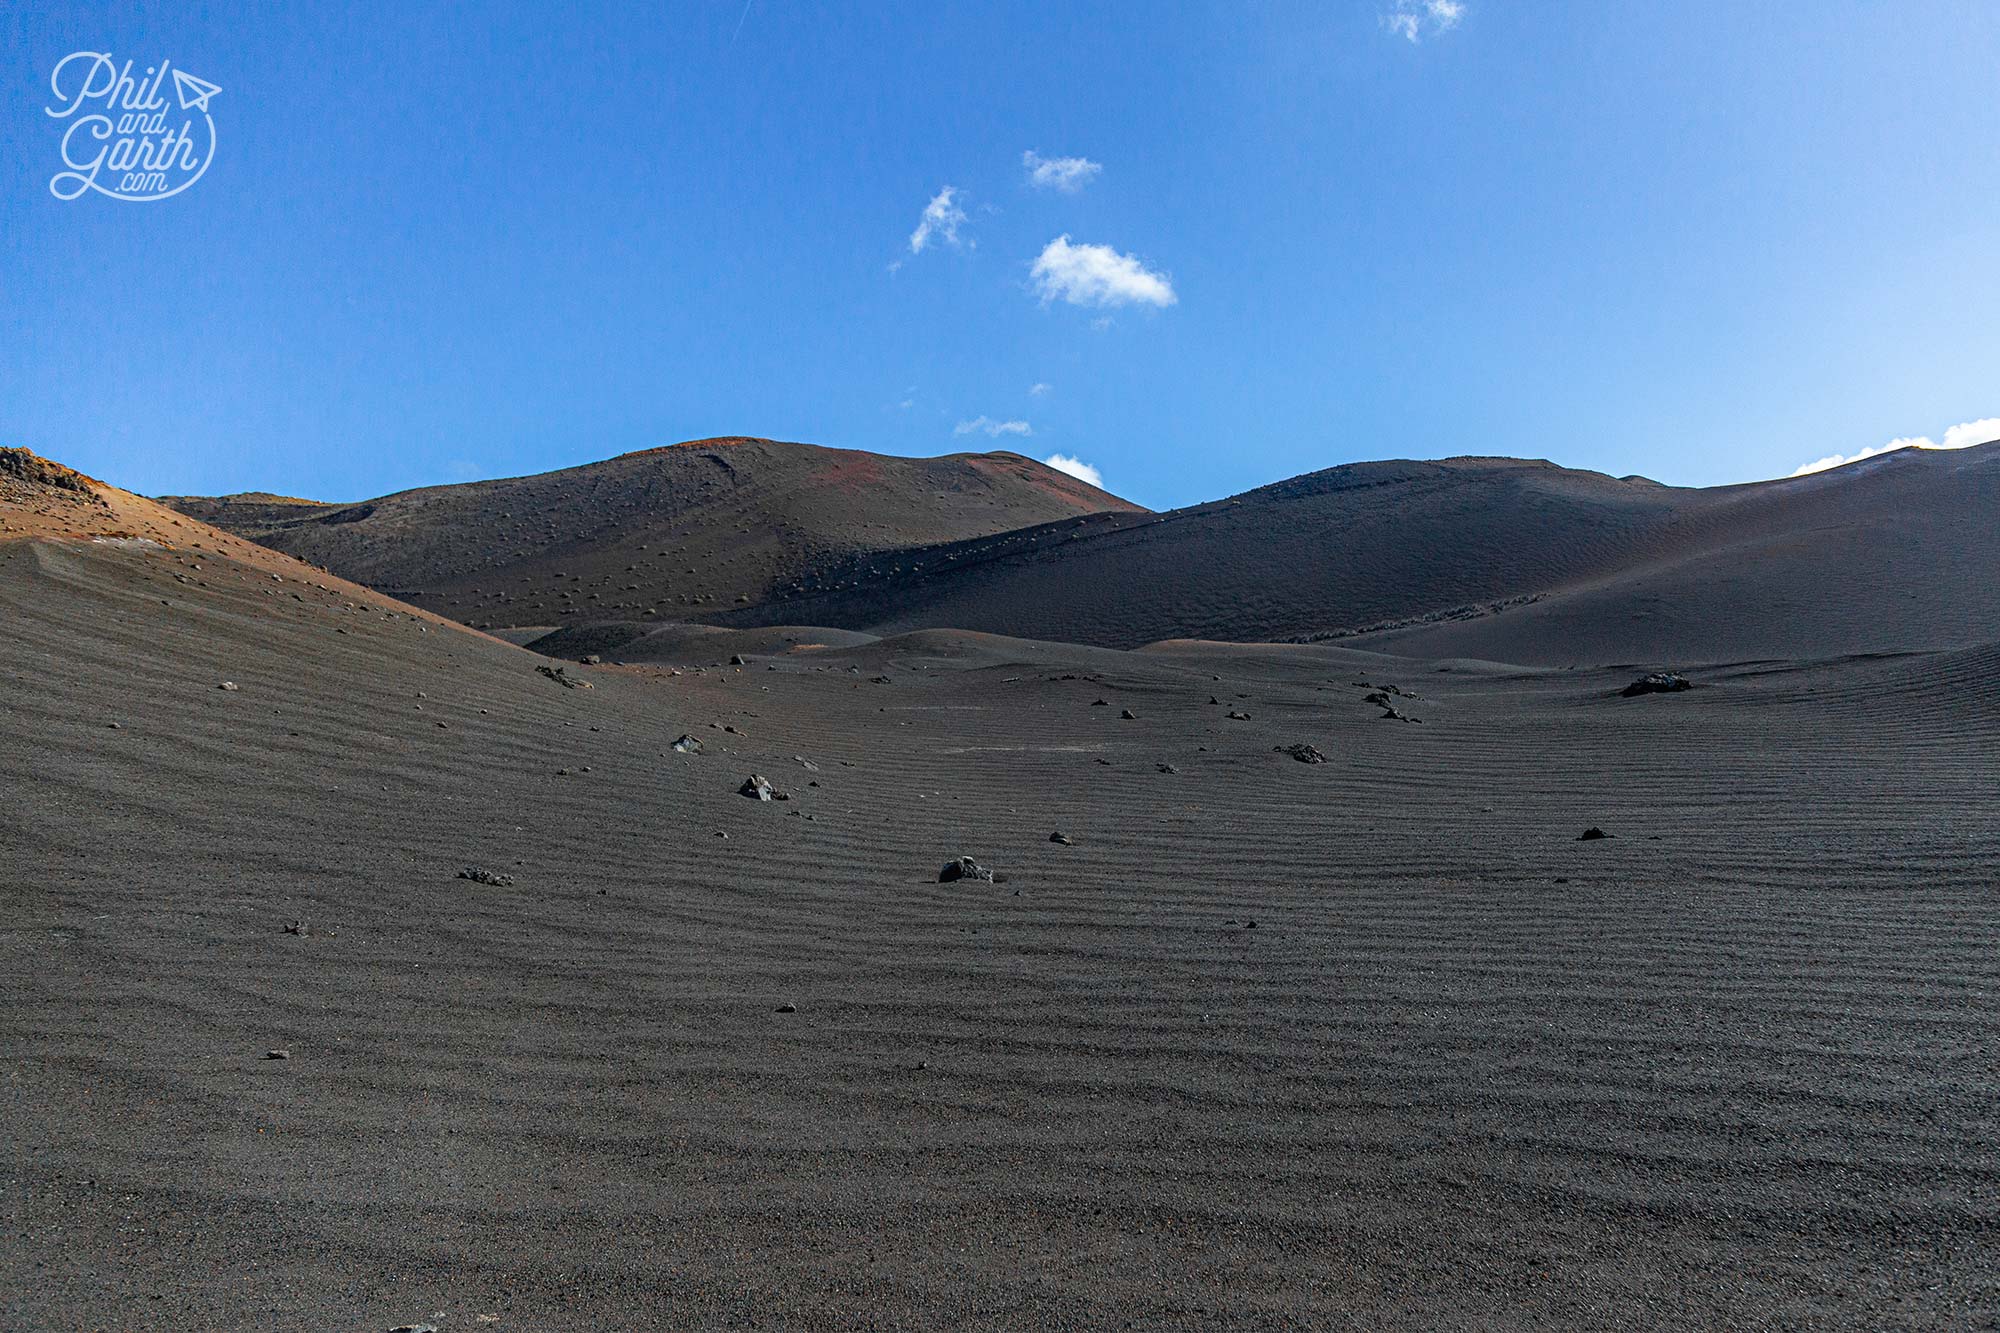 Barren lava plains covered in black volcanic ash